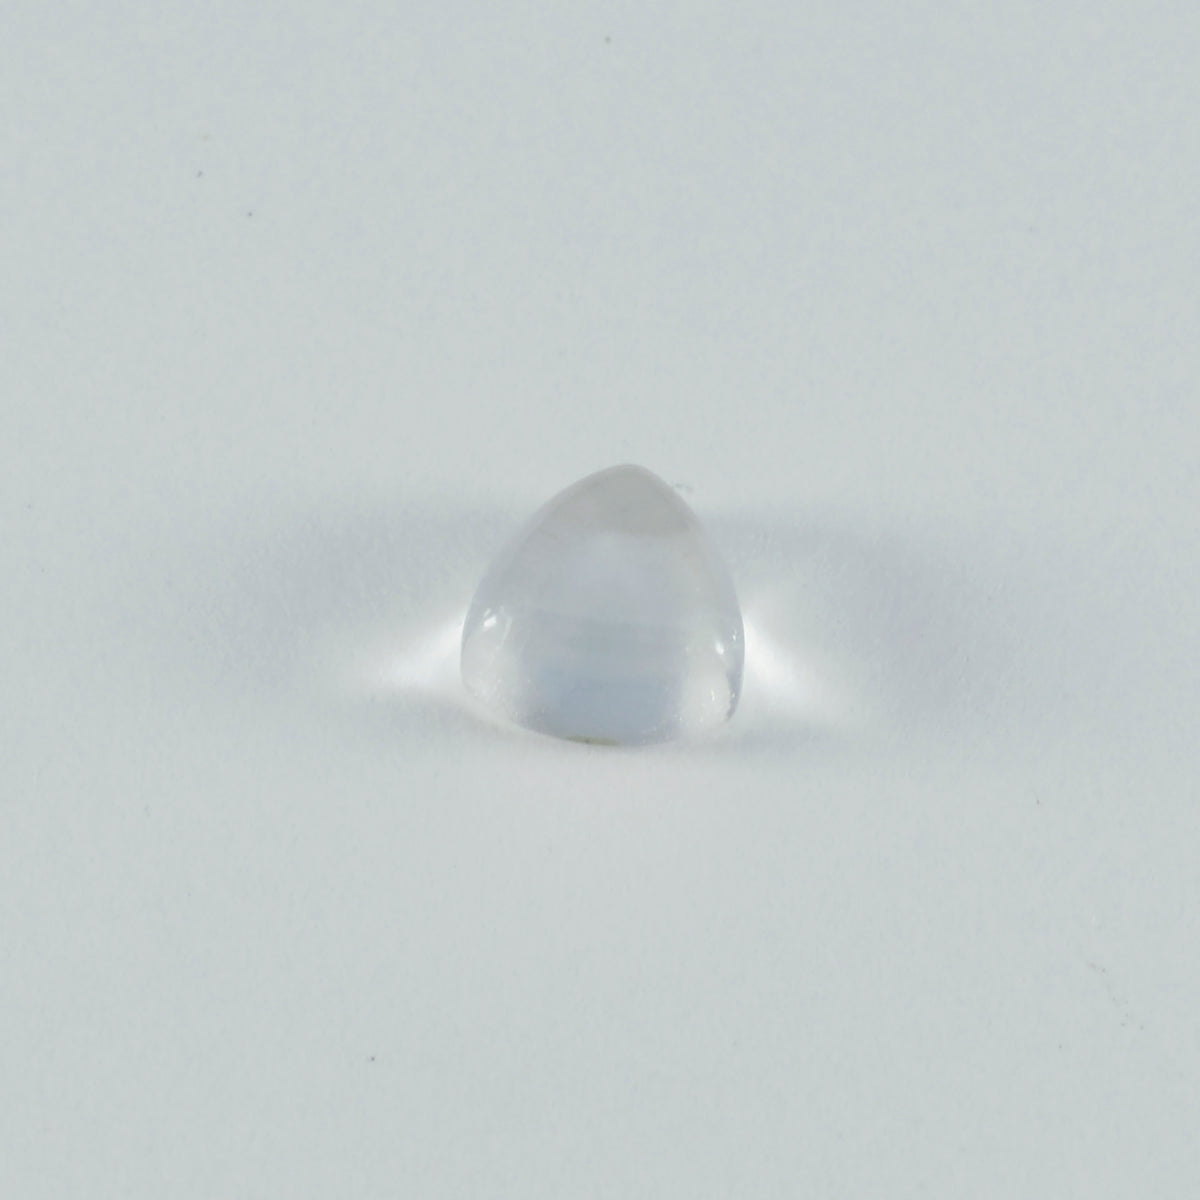 riyogems 1pc ホワイトクリスタルクォーツカボション 15x15 mm 兆形状の高品質の宝石